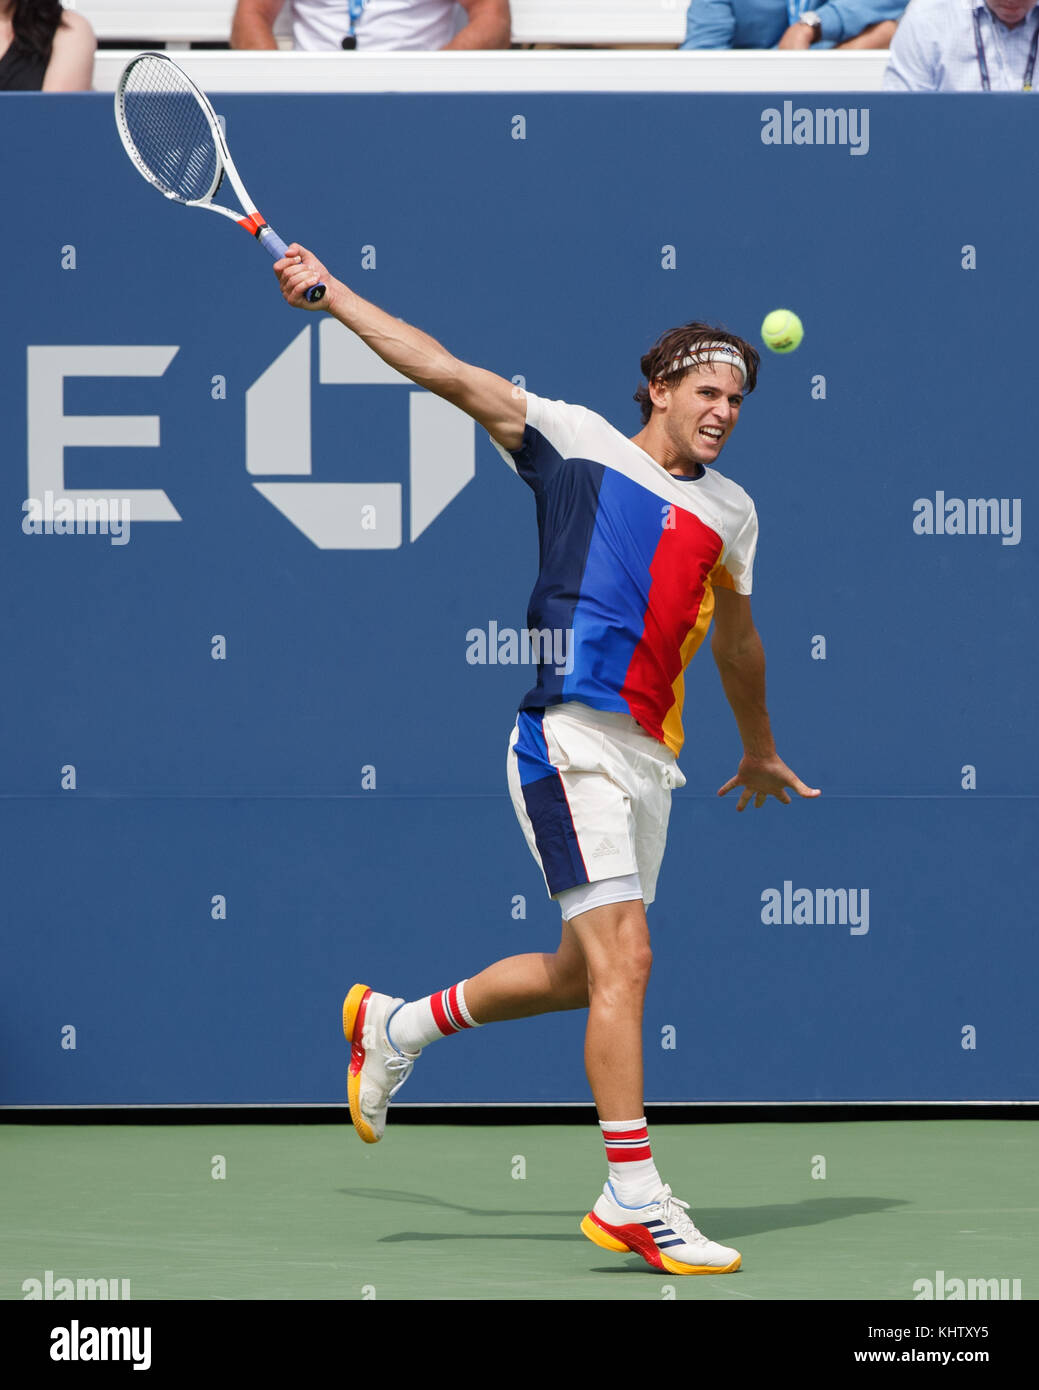 Austrian tennis player DOMINIC THIEM (AUT) plays backhand shot during men's singles match at US Open 2017 Tennis Championship, New York City, New York Stock Photo